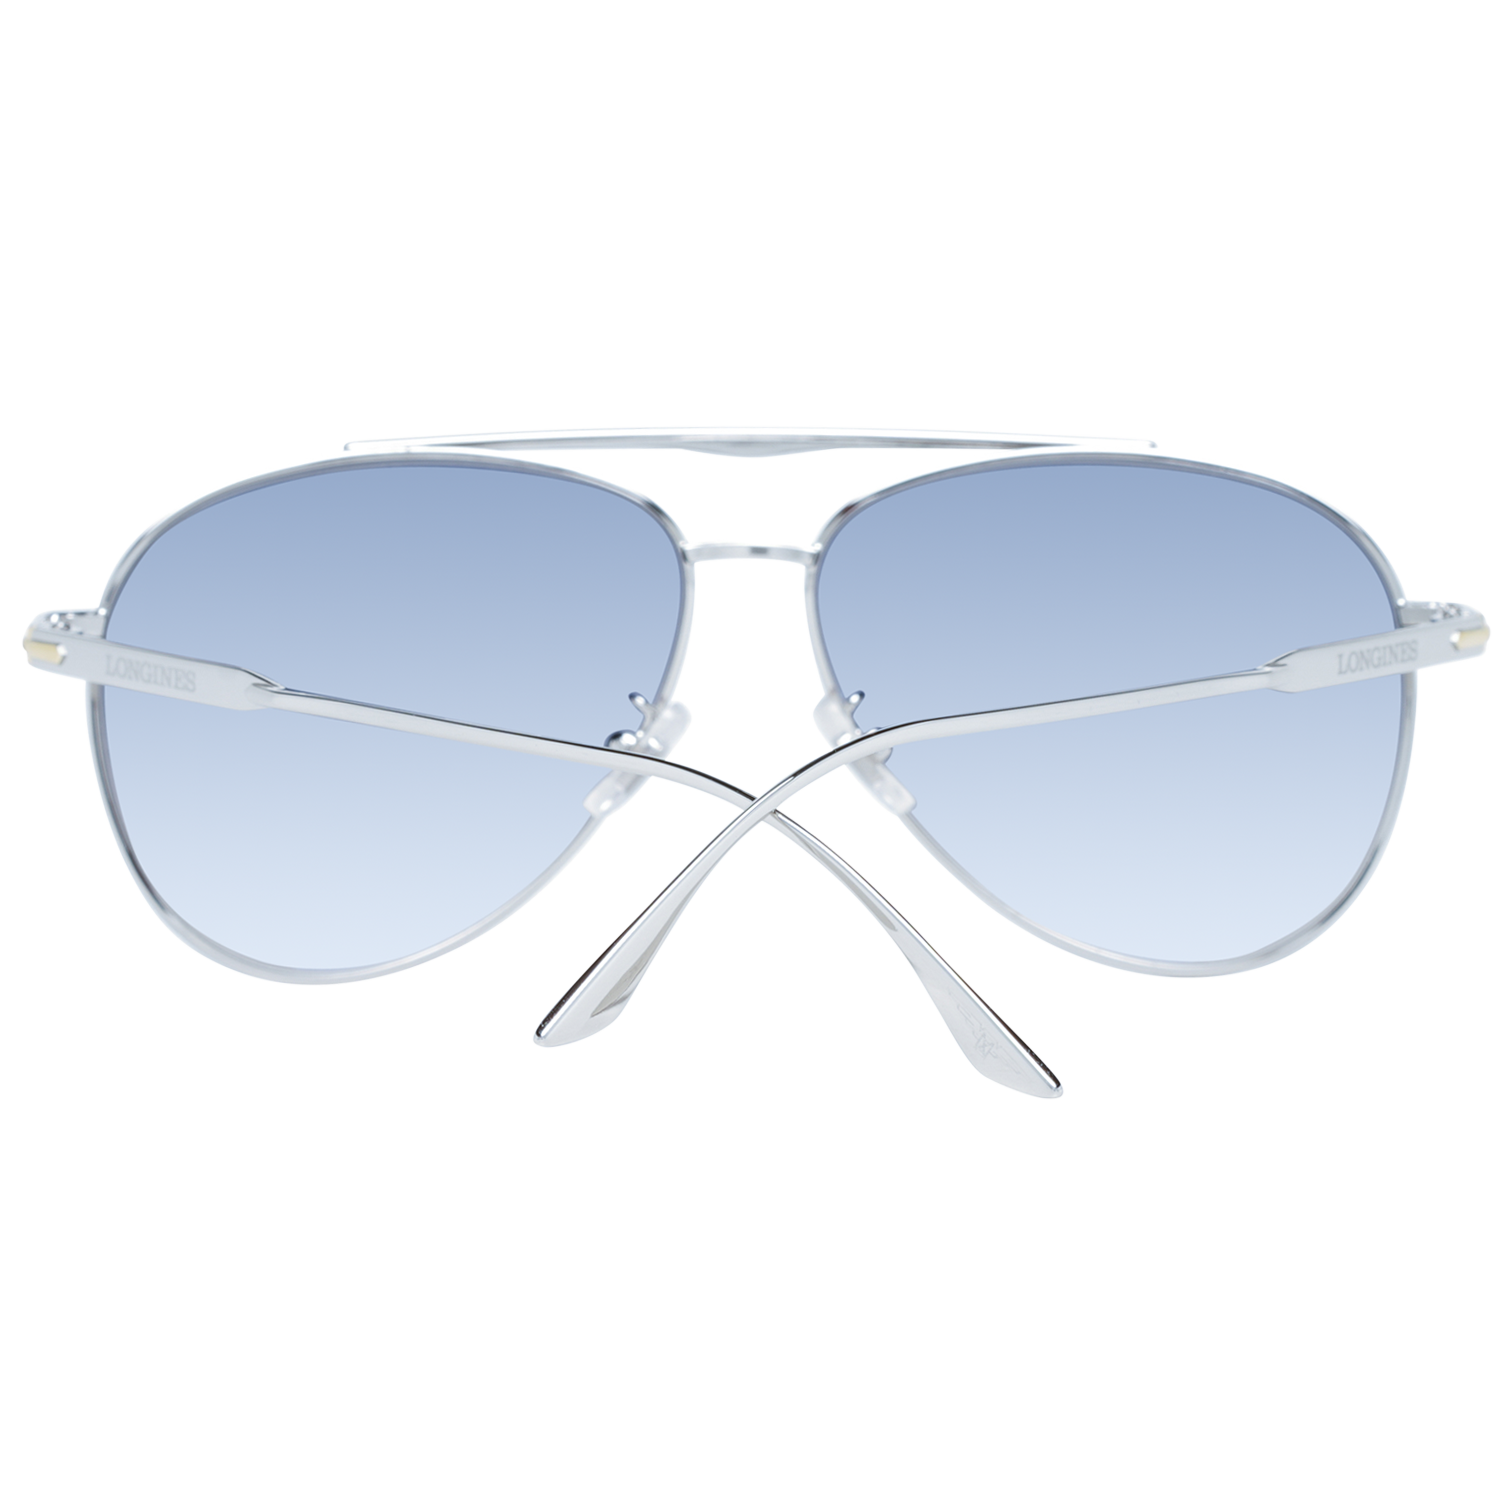 Longines Sunglasses Longines Sunglasses LG0005-H 16C 59mm Eyeglasses Eyewear UK USA Australia 